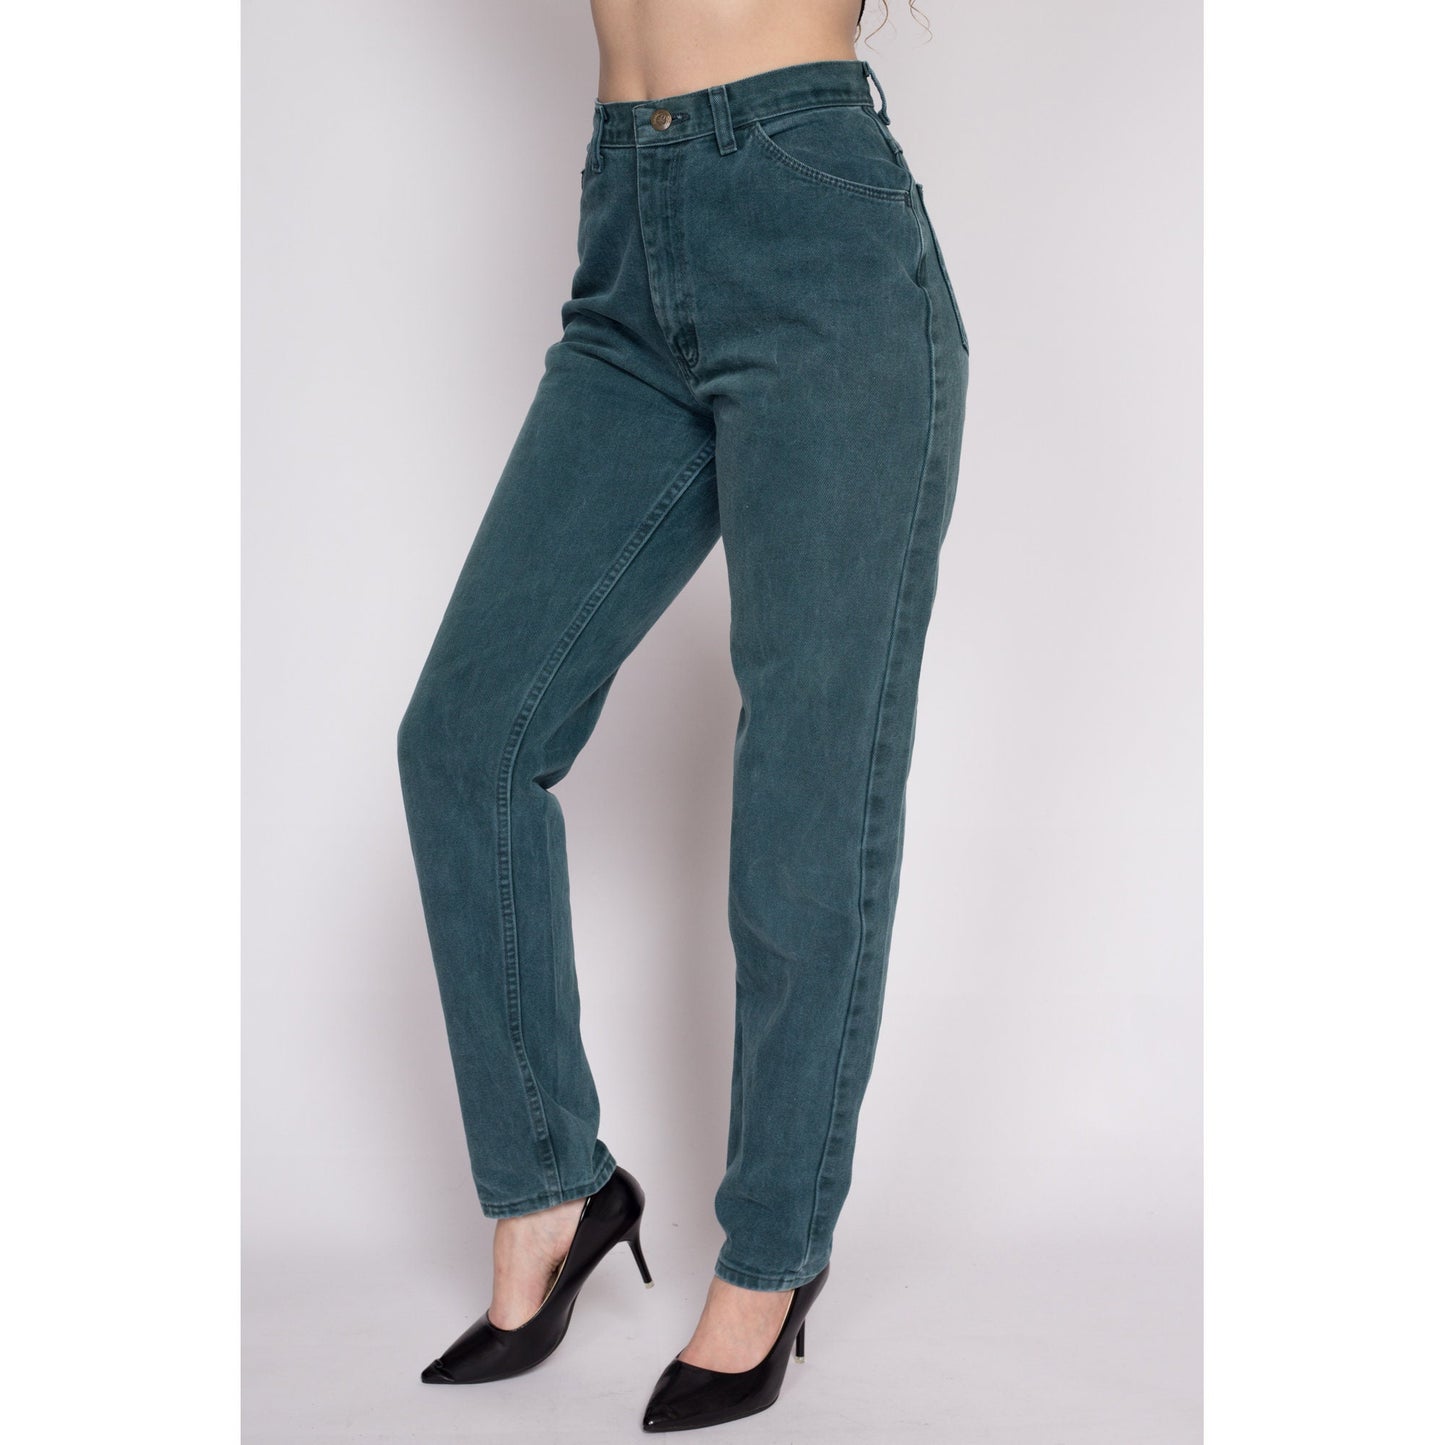 M| 90s Wrangler High Waisted Emerald Green Jeans - Medium, 27.5" | Vintage Denim Tapered Leg Mom Jeans